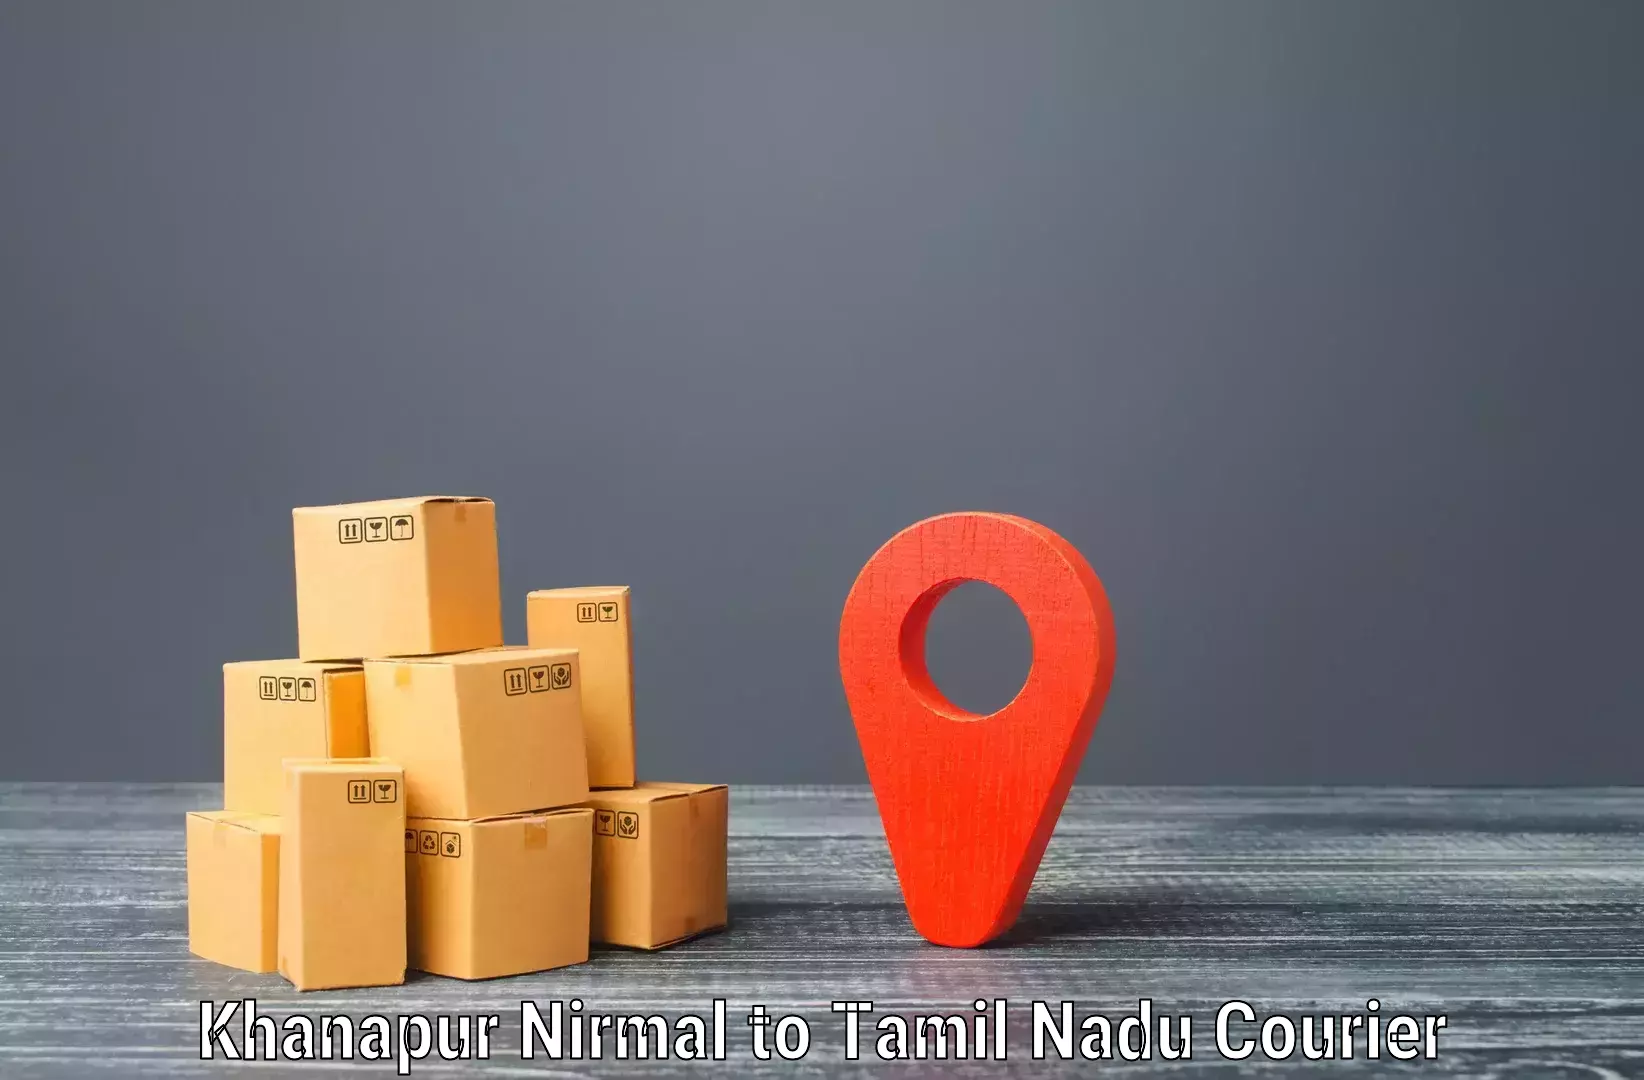 Rapid freight solutions Khanapur Nirmal to Ambattur